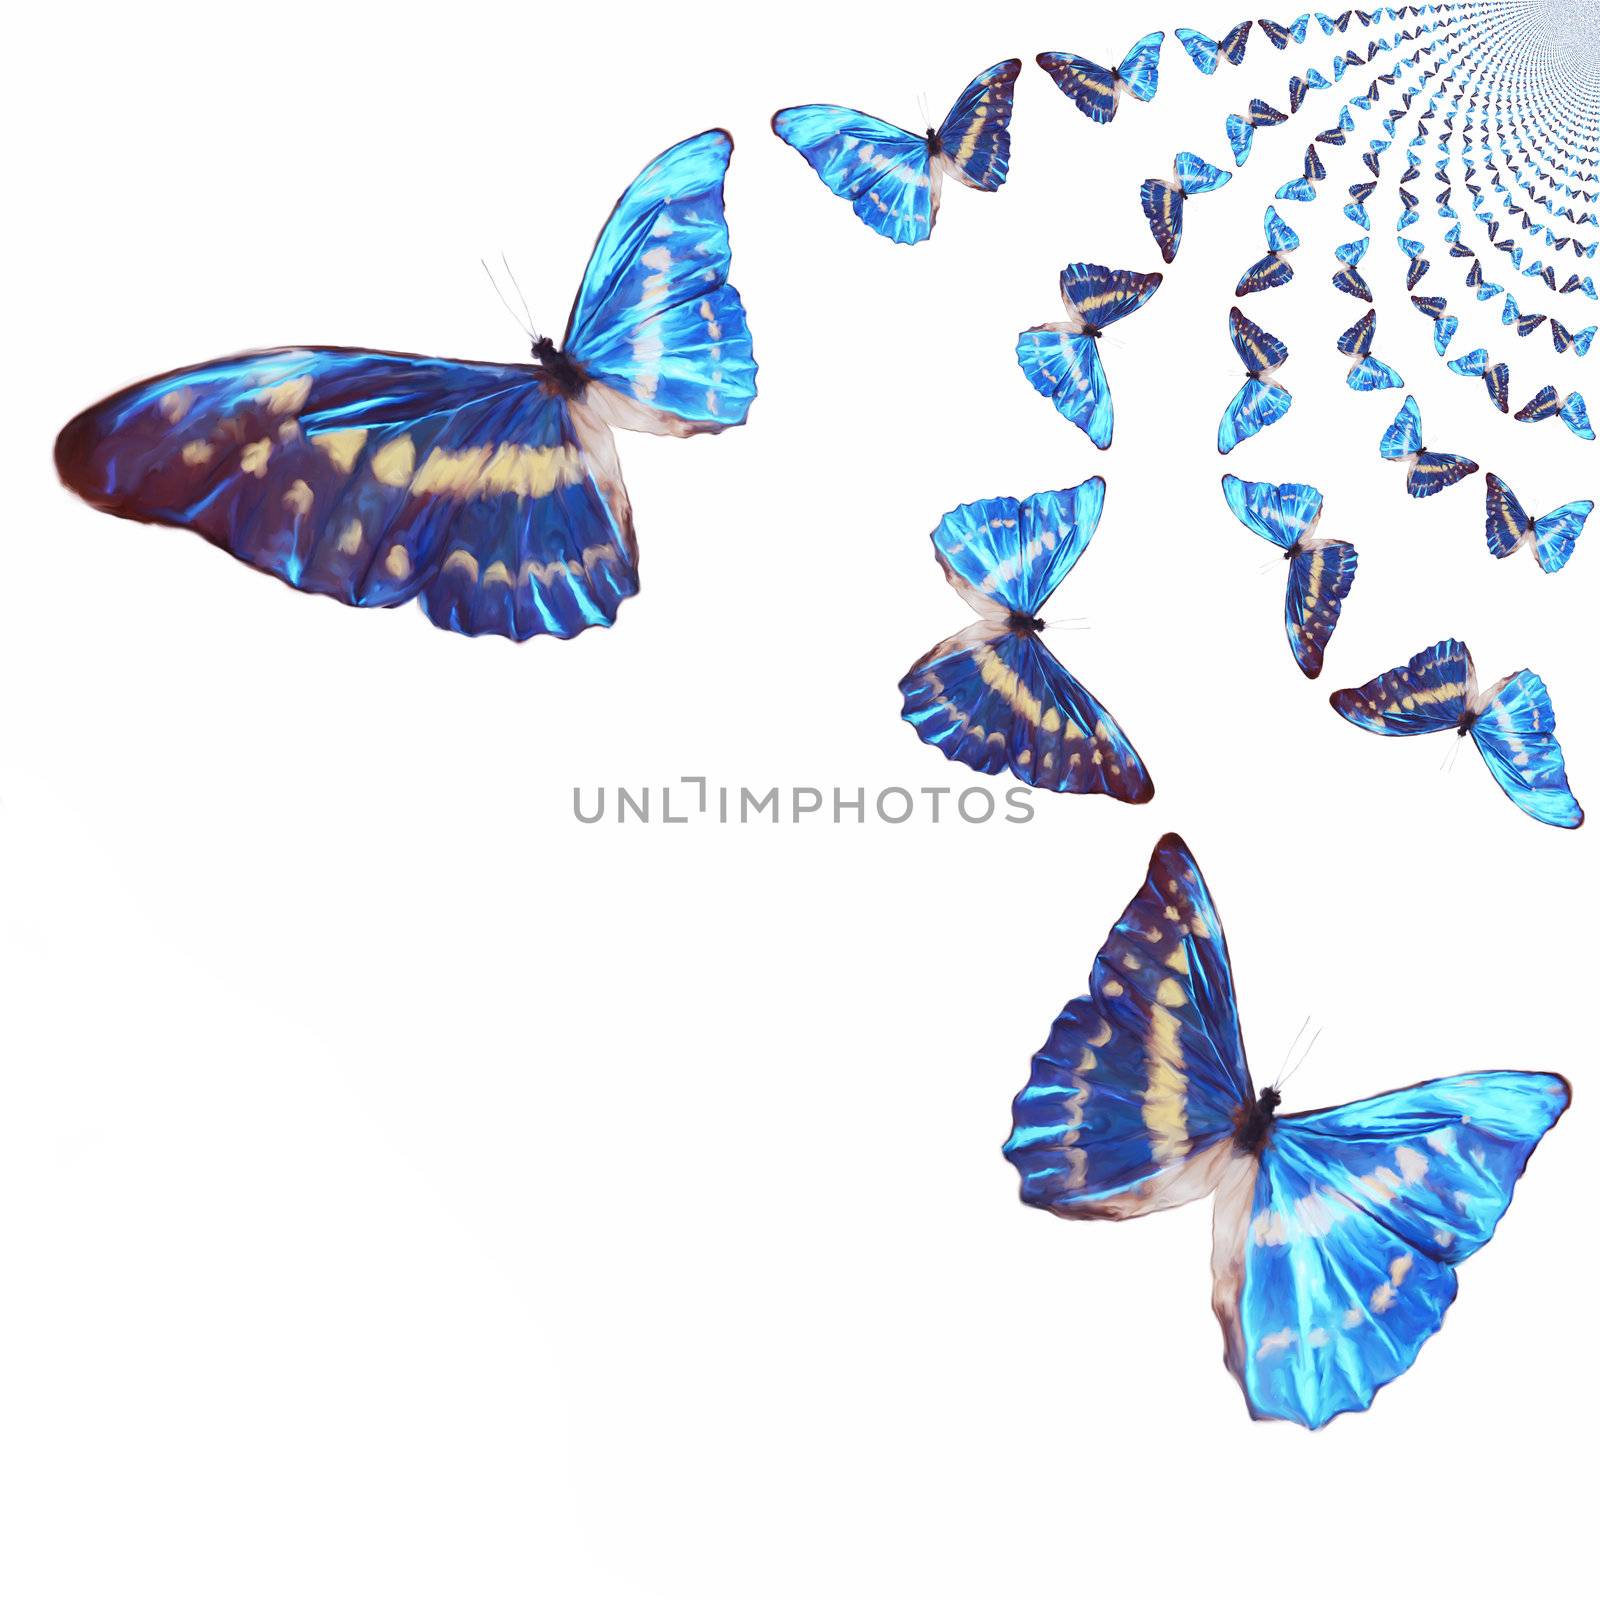 Kaleidoscopic Butterflies Illustration by 3quarks